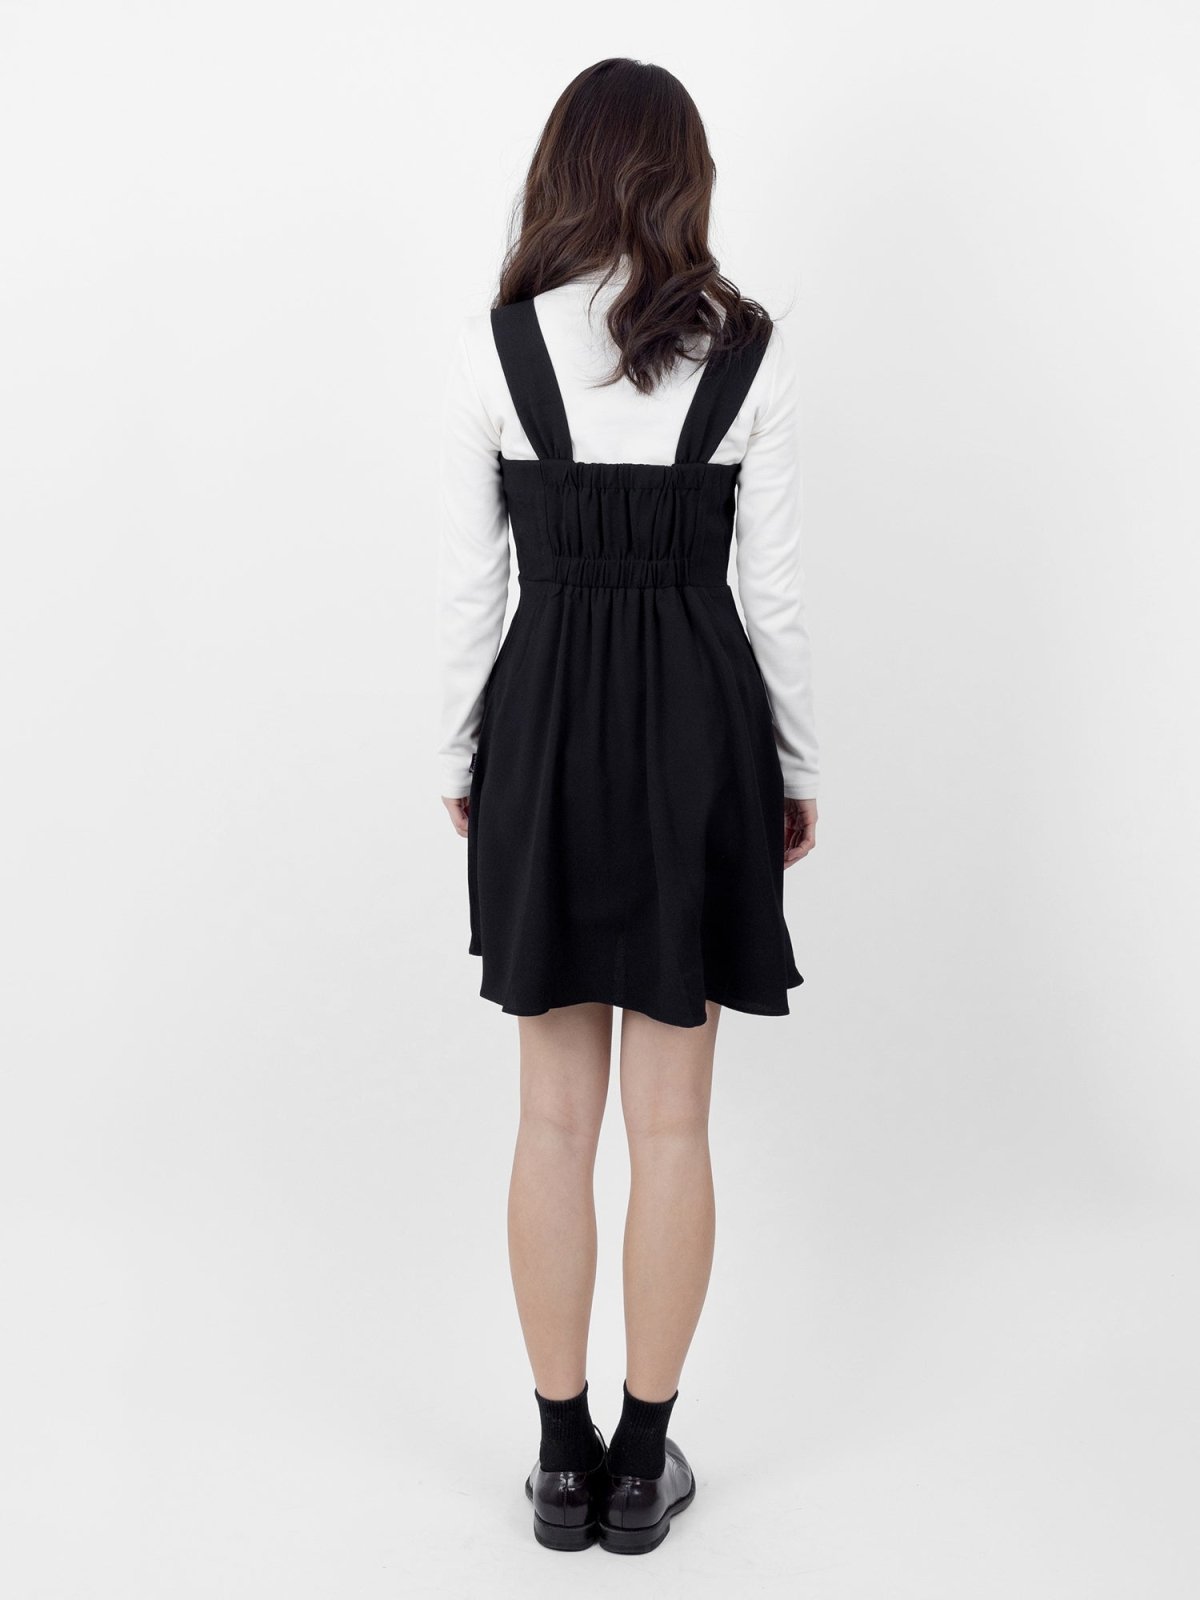 Theia Sweetheart Neck Mini Dress - DAG-DD8731-21BlackS - Black - S - D'ZAGE Designs